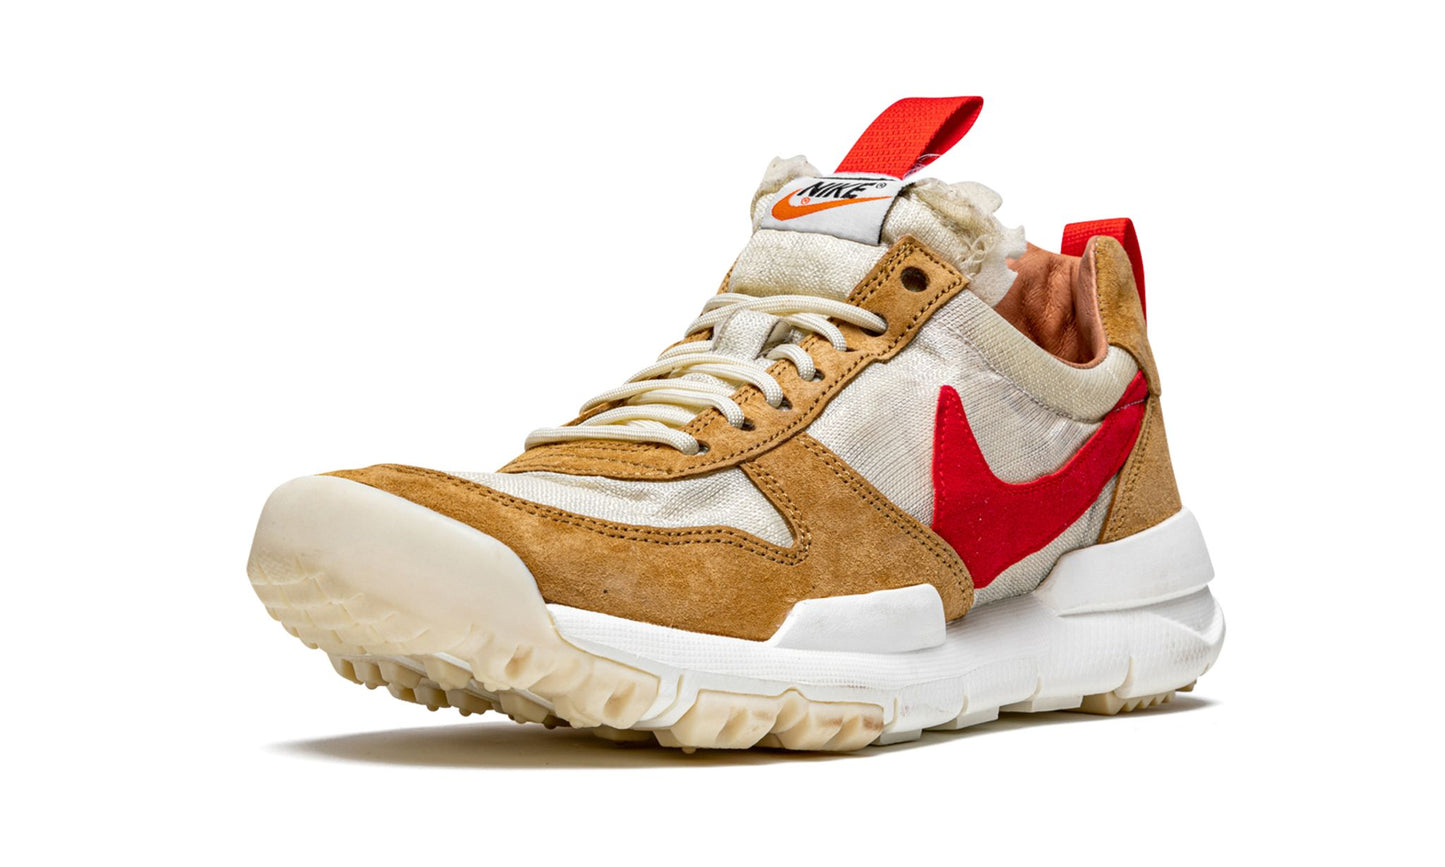 Nike Mars Yard Shoe